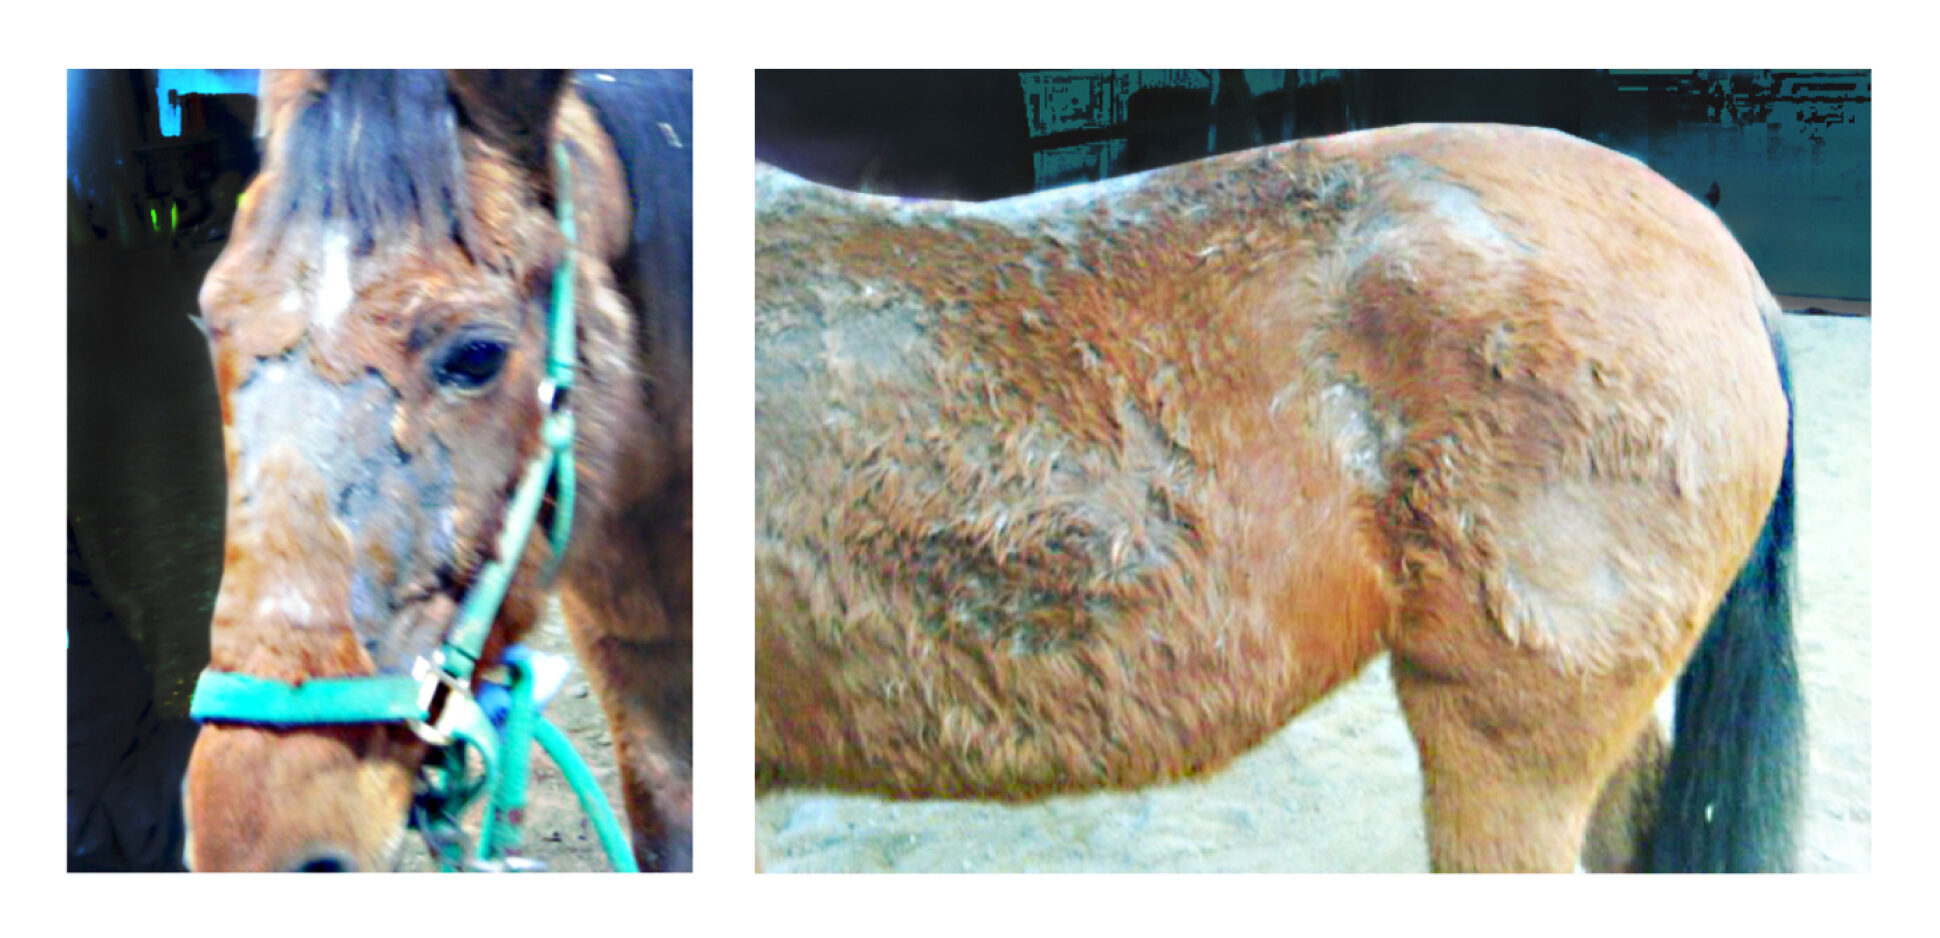 Rain Rot in horses treatment